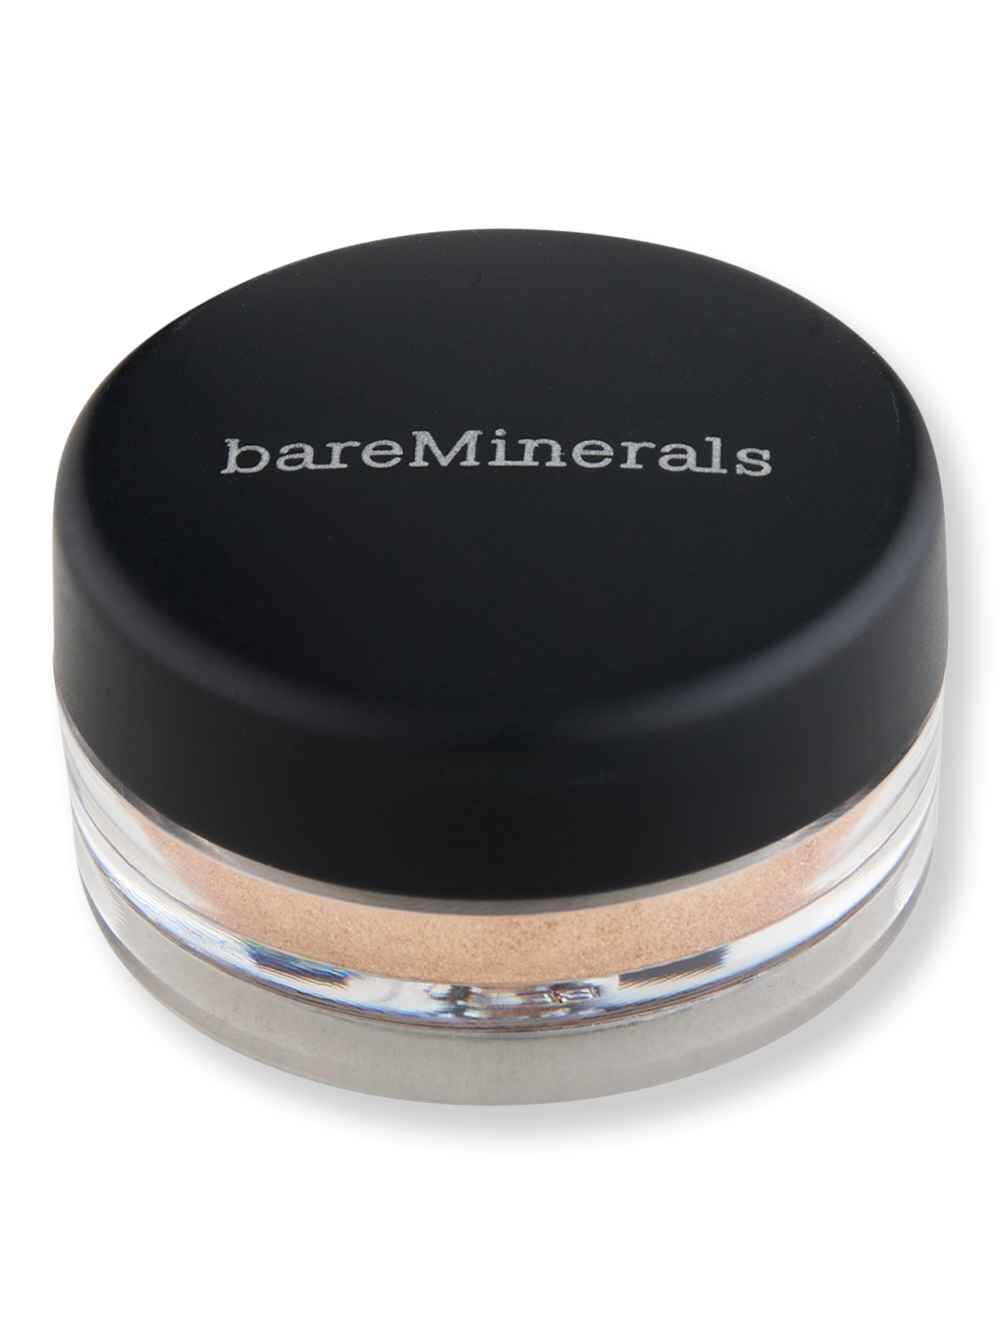 Bareminerals Bareminerals Loose Mineral Eyecolor True Gold .02 oz.57g Shadows 